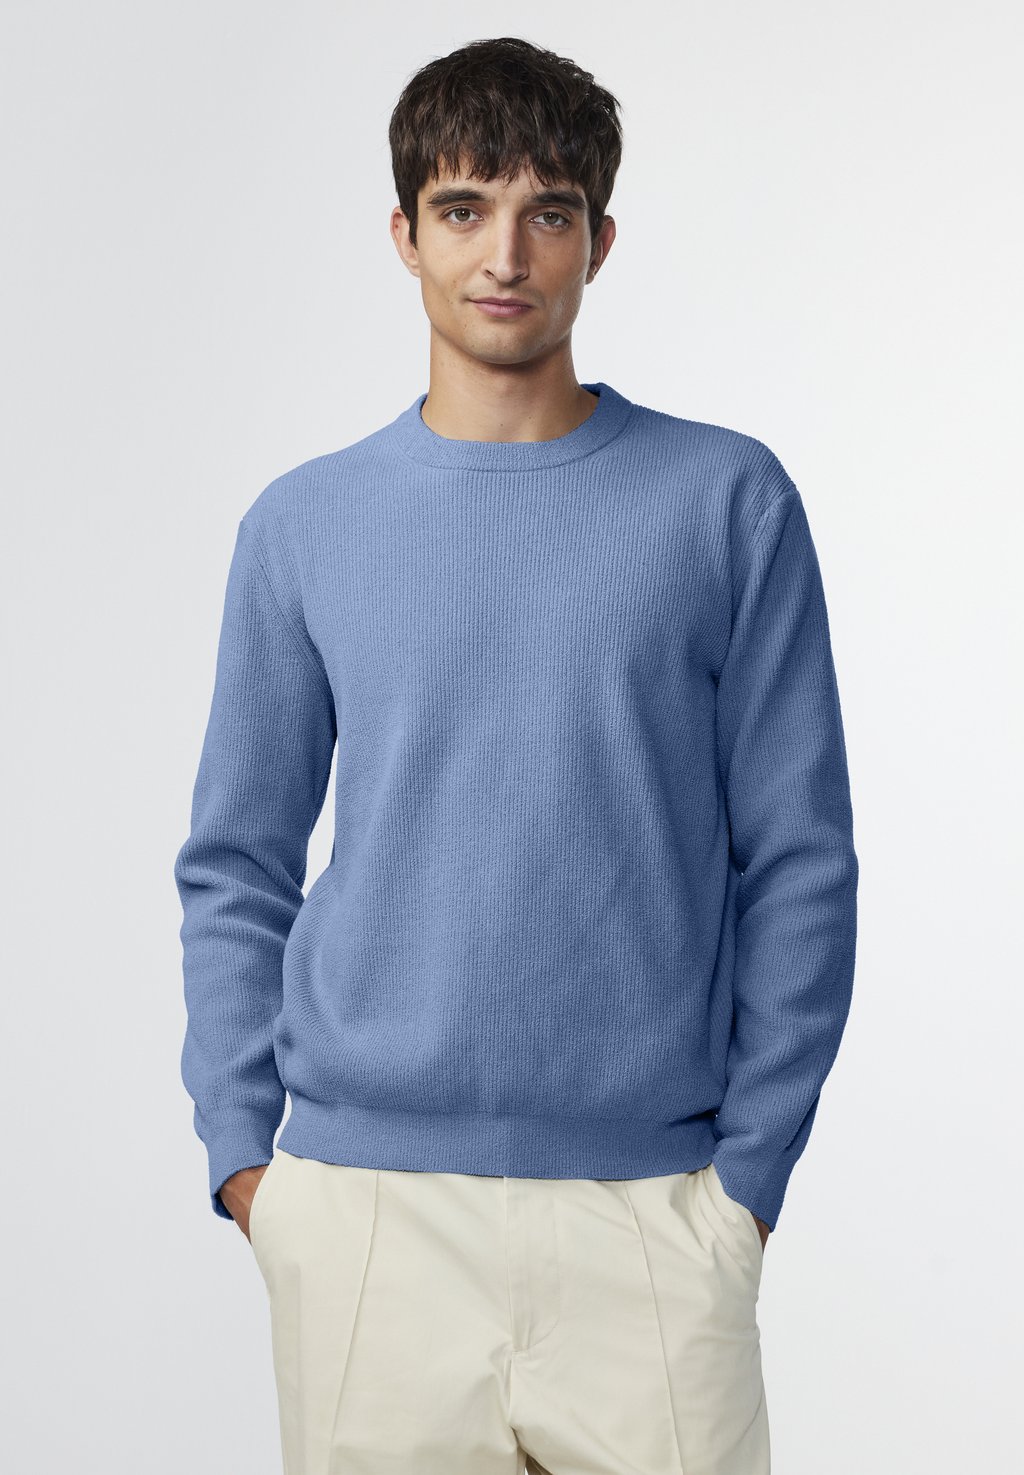 Вязаный свитер NN.07, цвет gray blue